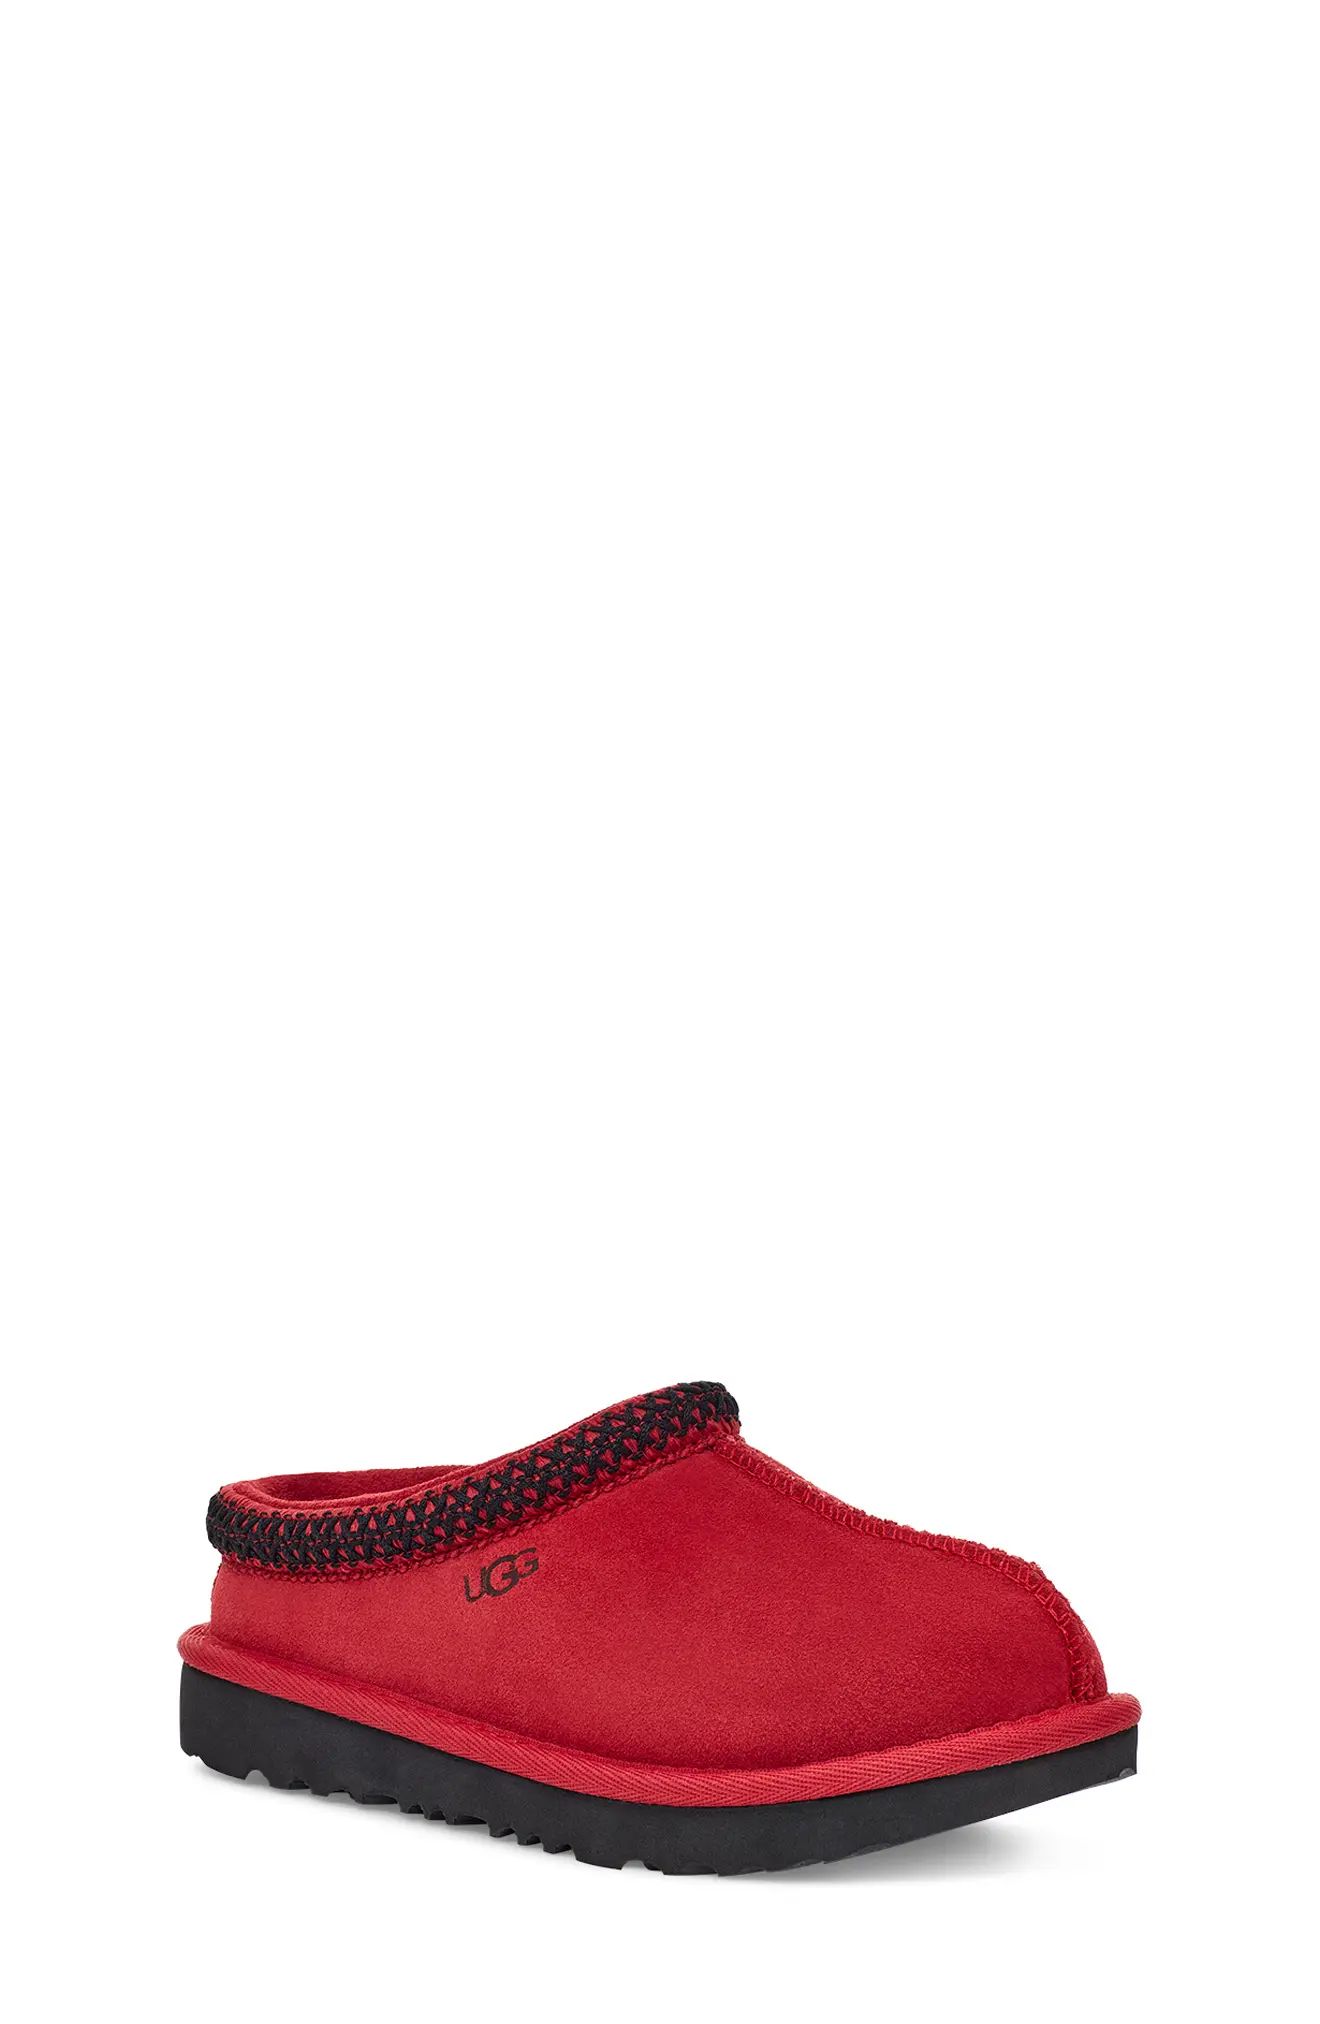 UGG(R) K-Tasman II Embroidered Slipper in Samba Red at Nordstrom, Size 9 M | Nordstrom